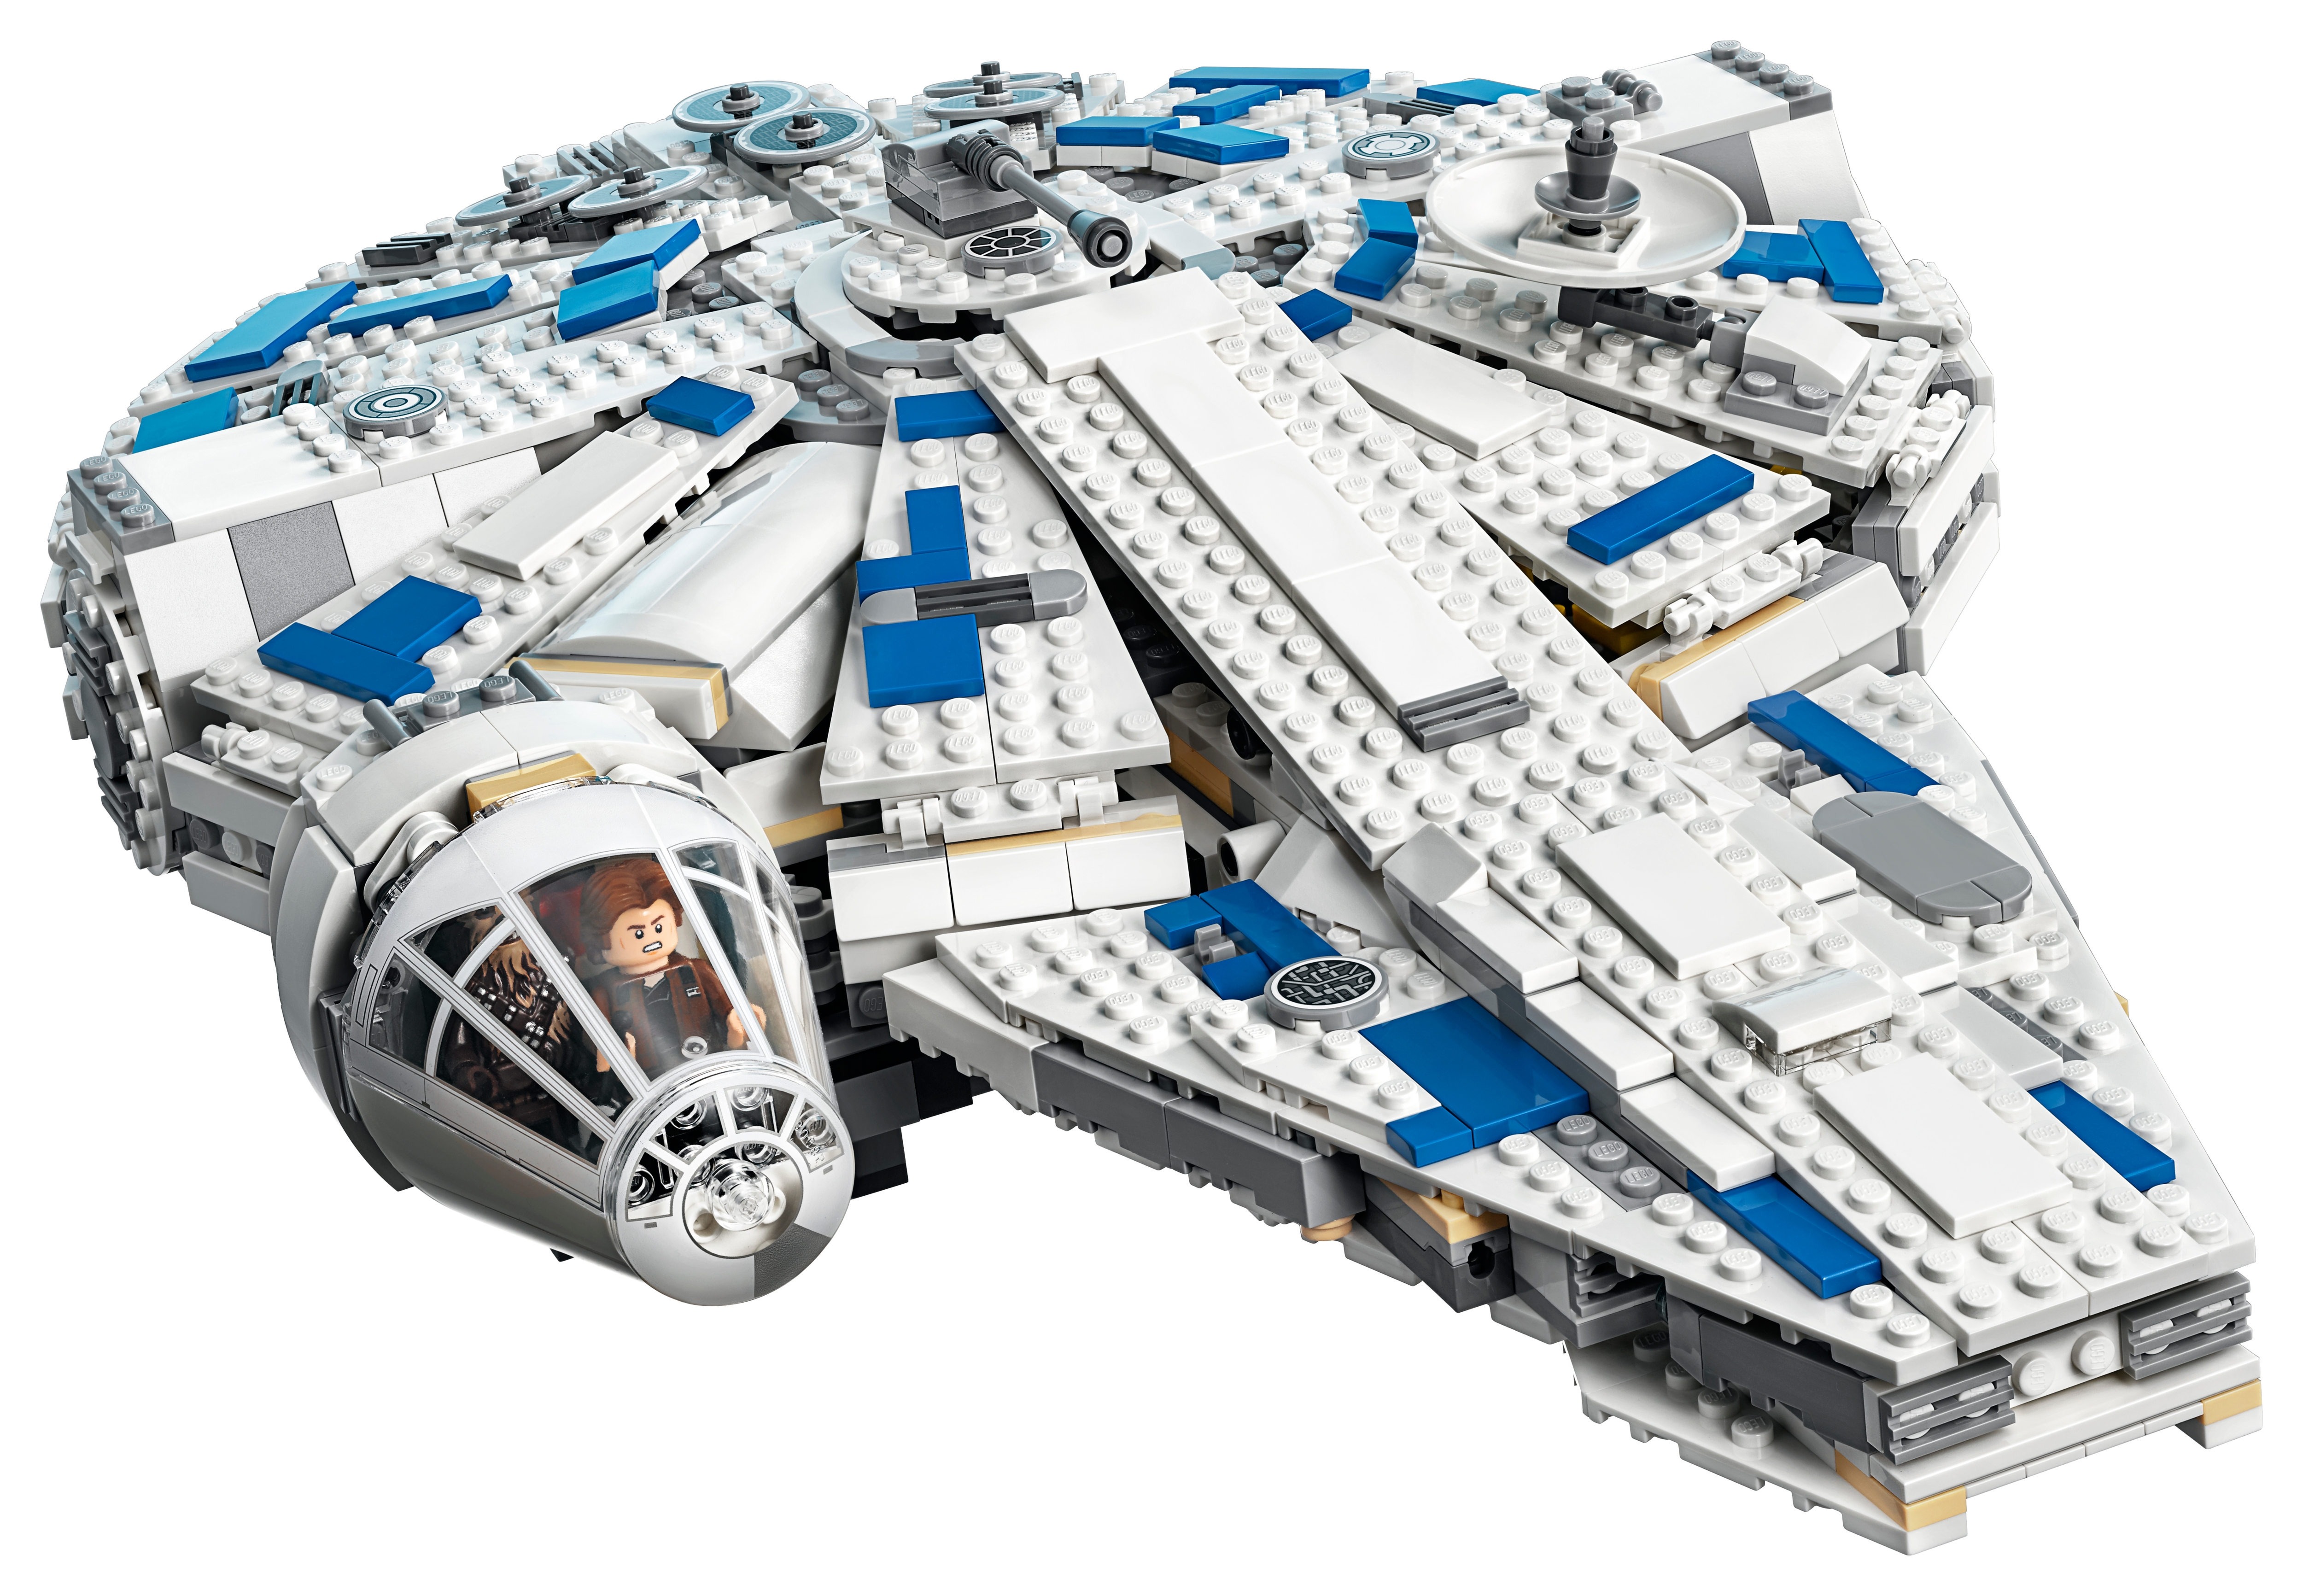 Lego Star Wars STICKER SHEET ONLY for set 75212 Kessel Run Millennium Falcon 